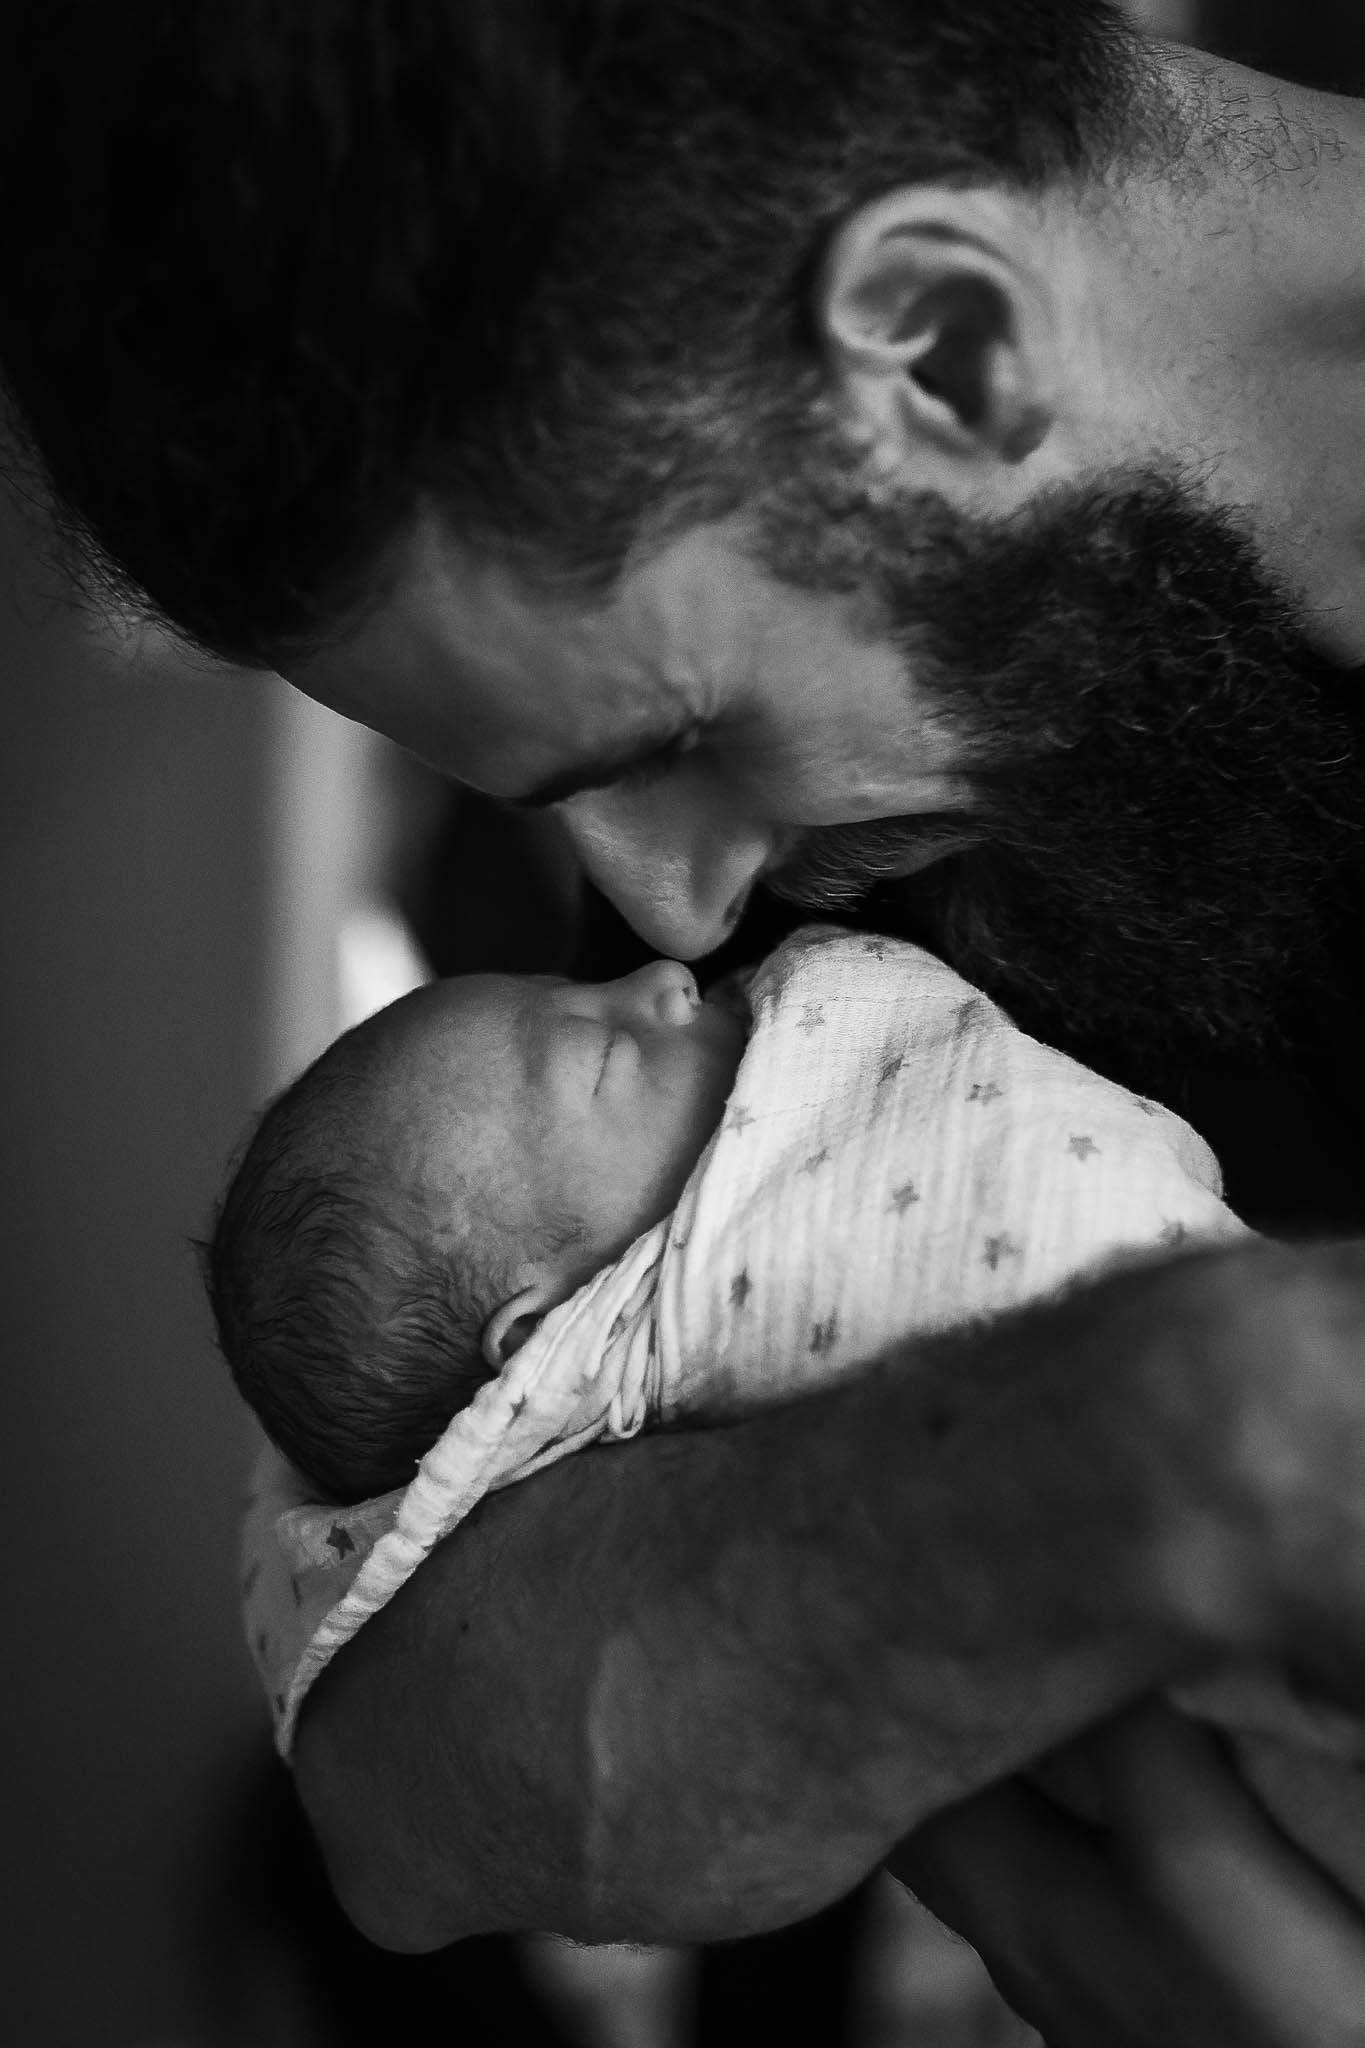 Vater mit neugeborenem Kind im Arm